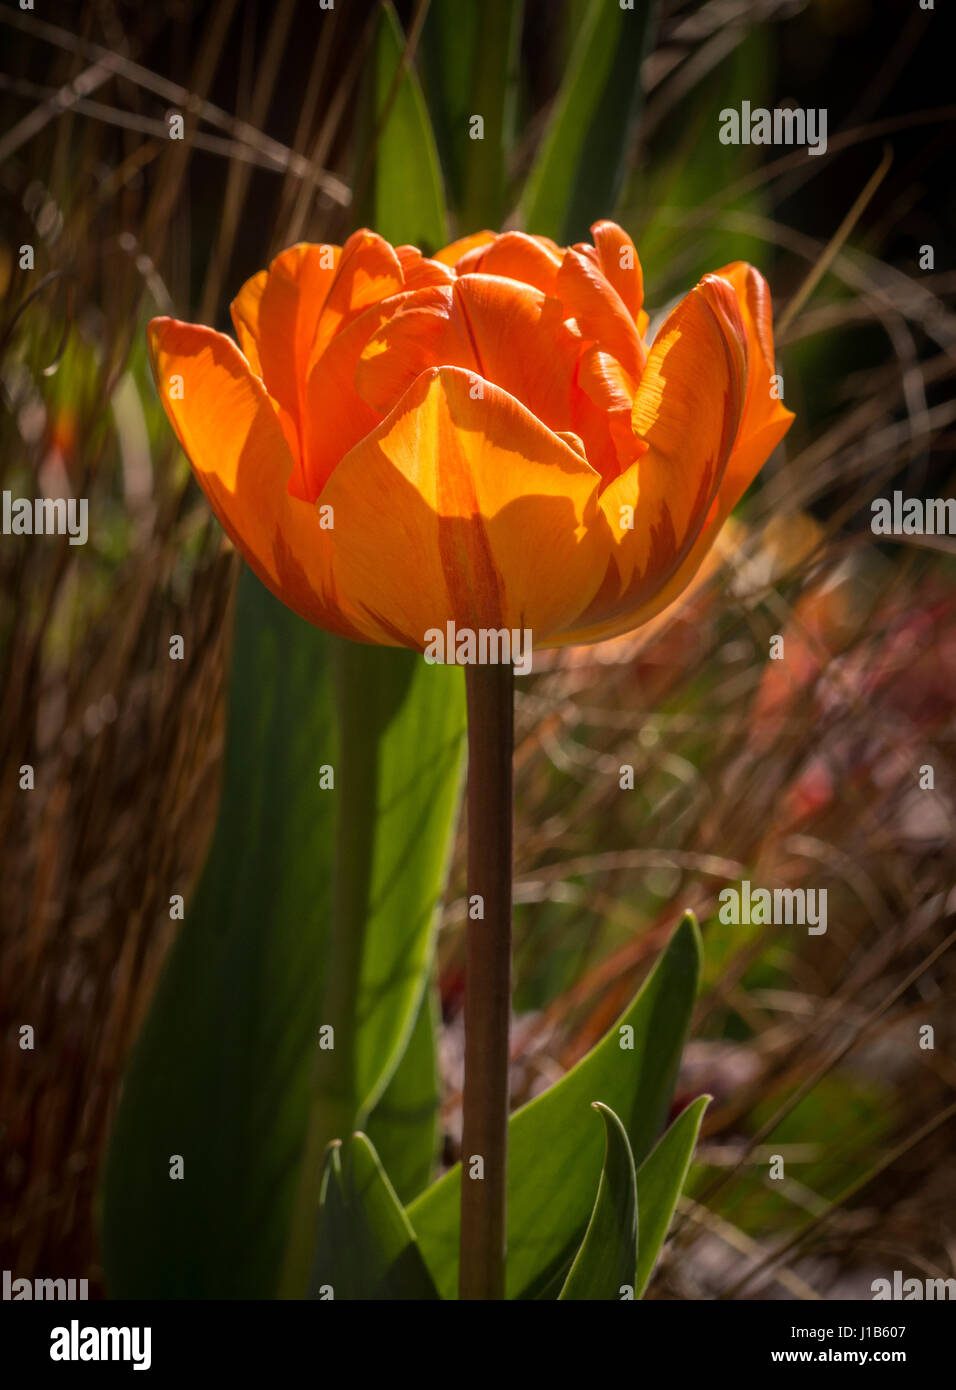 Side view of an orange Princess Irene tulip flower growing in a garden. Stock Photo